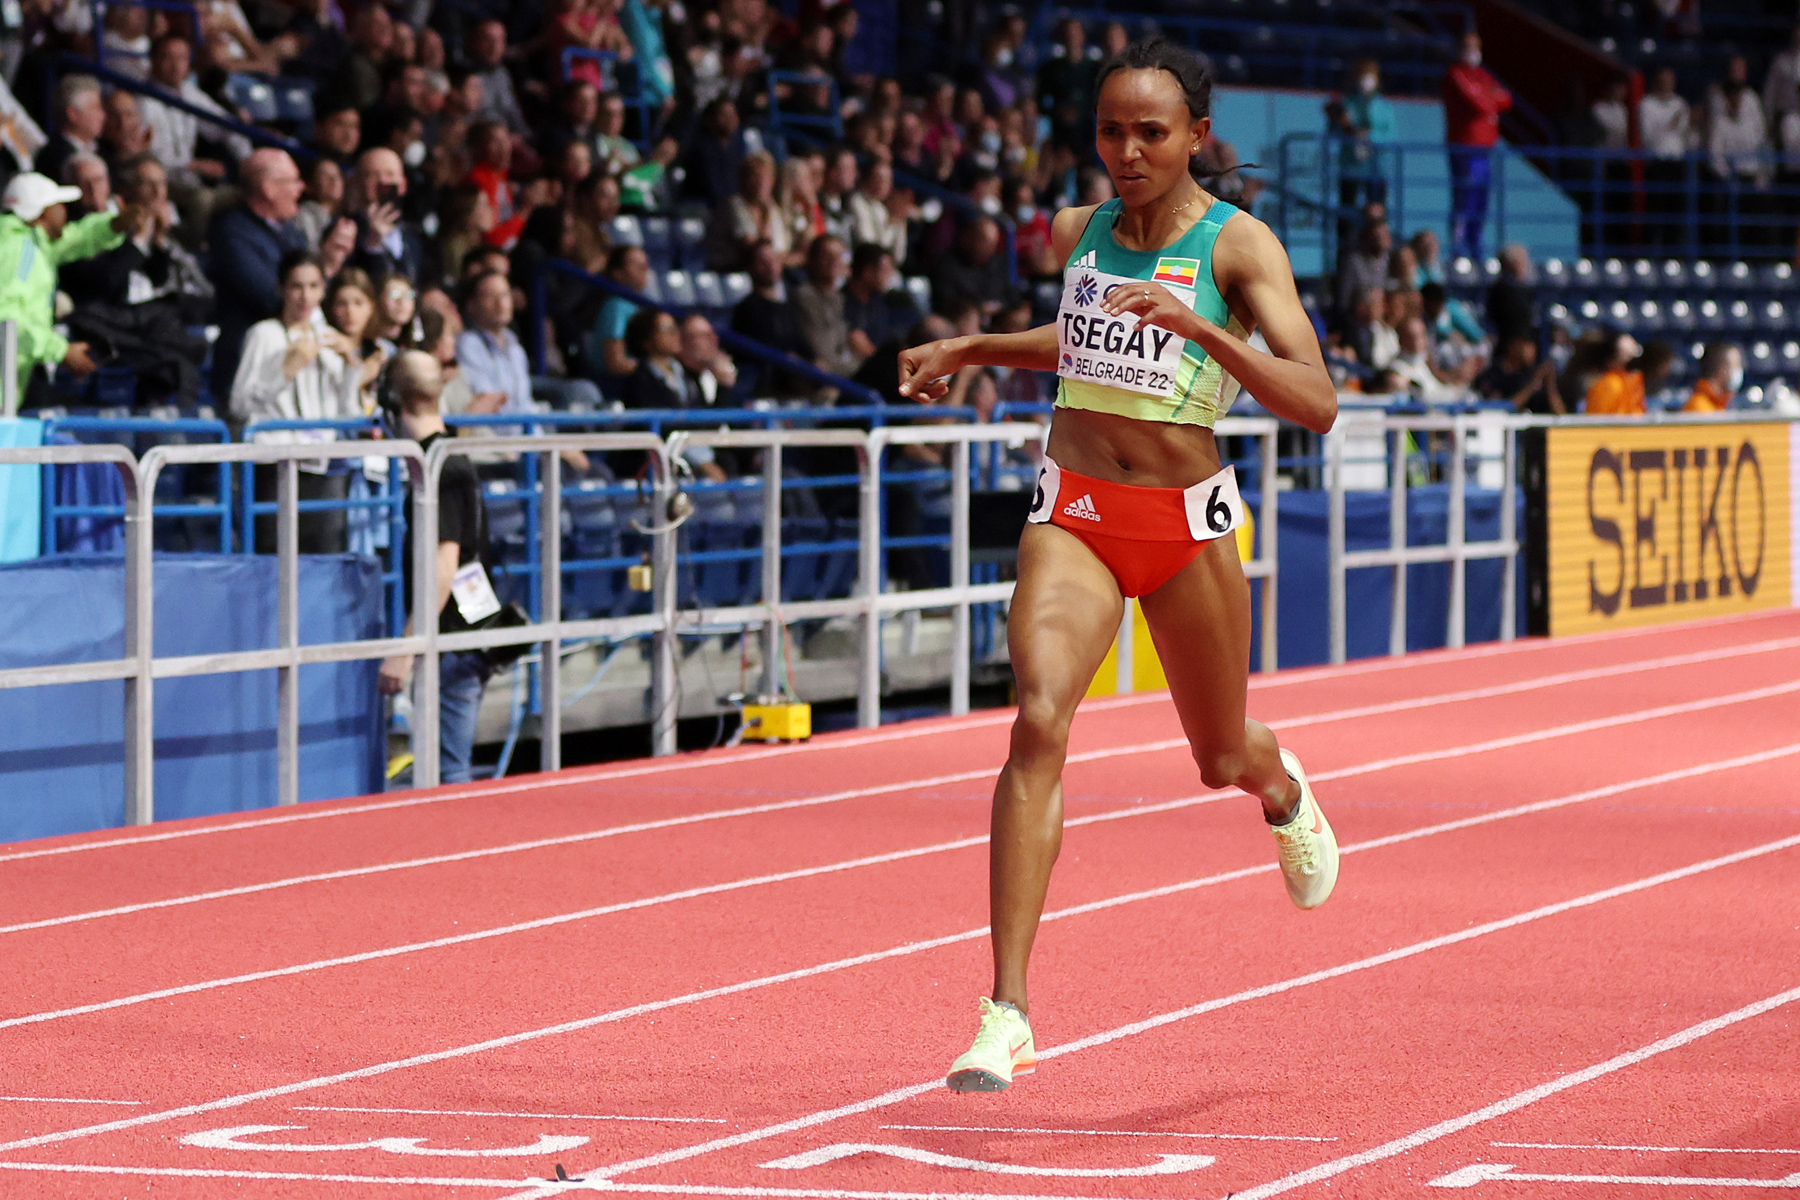 Ethiopian Guday Tsegay winning the women's 1500m in Belgrade 22 / Credit: Getty Images for World Athletics